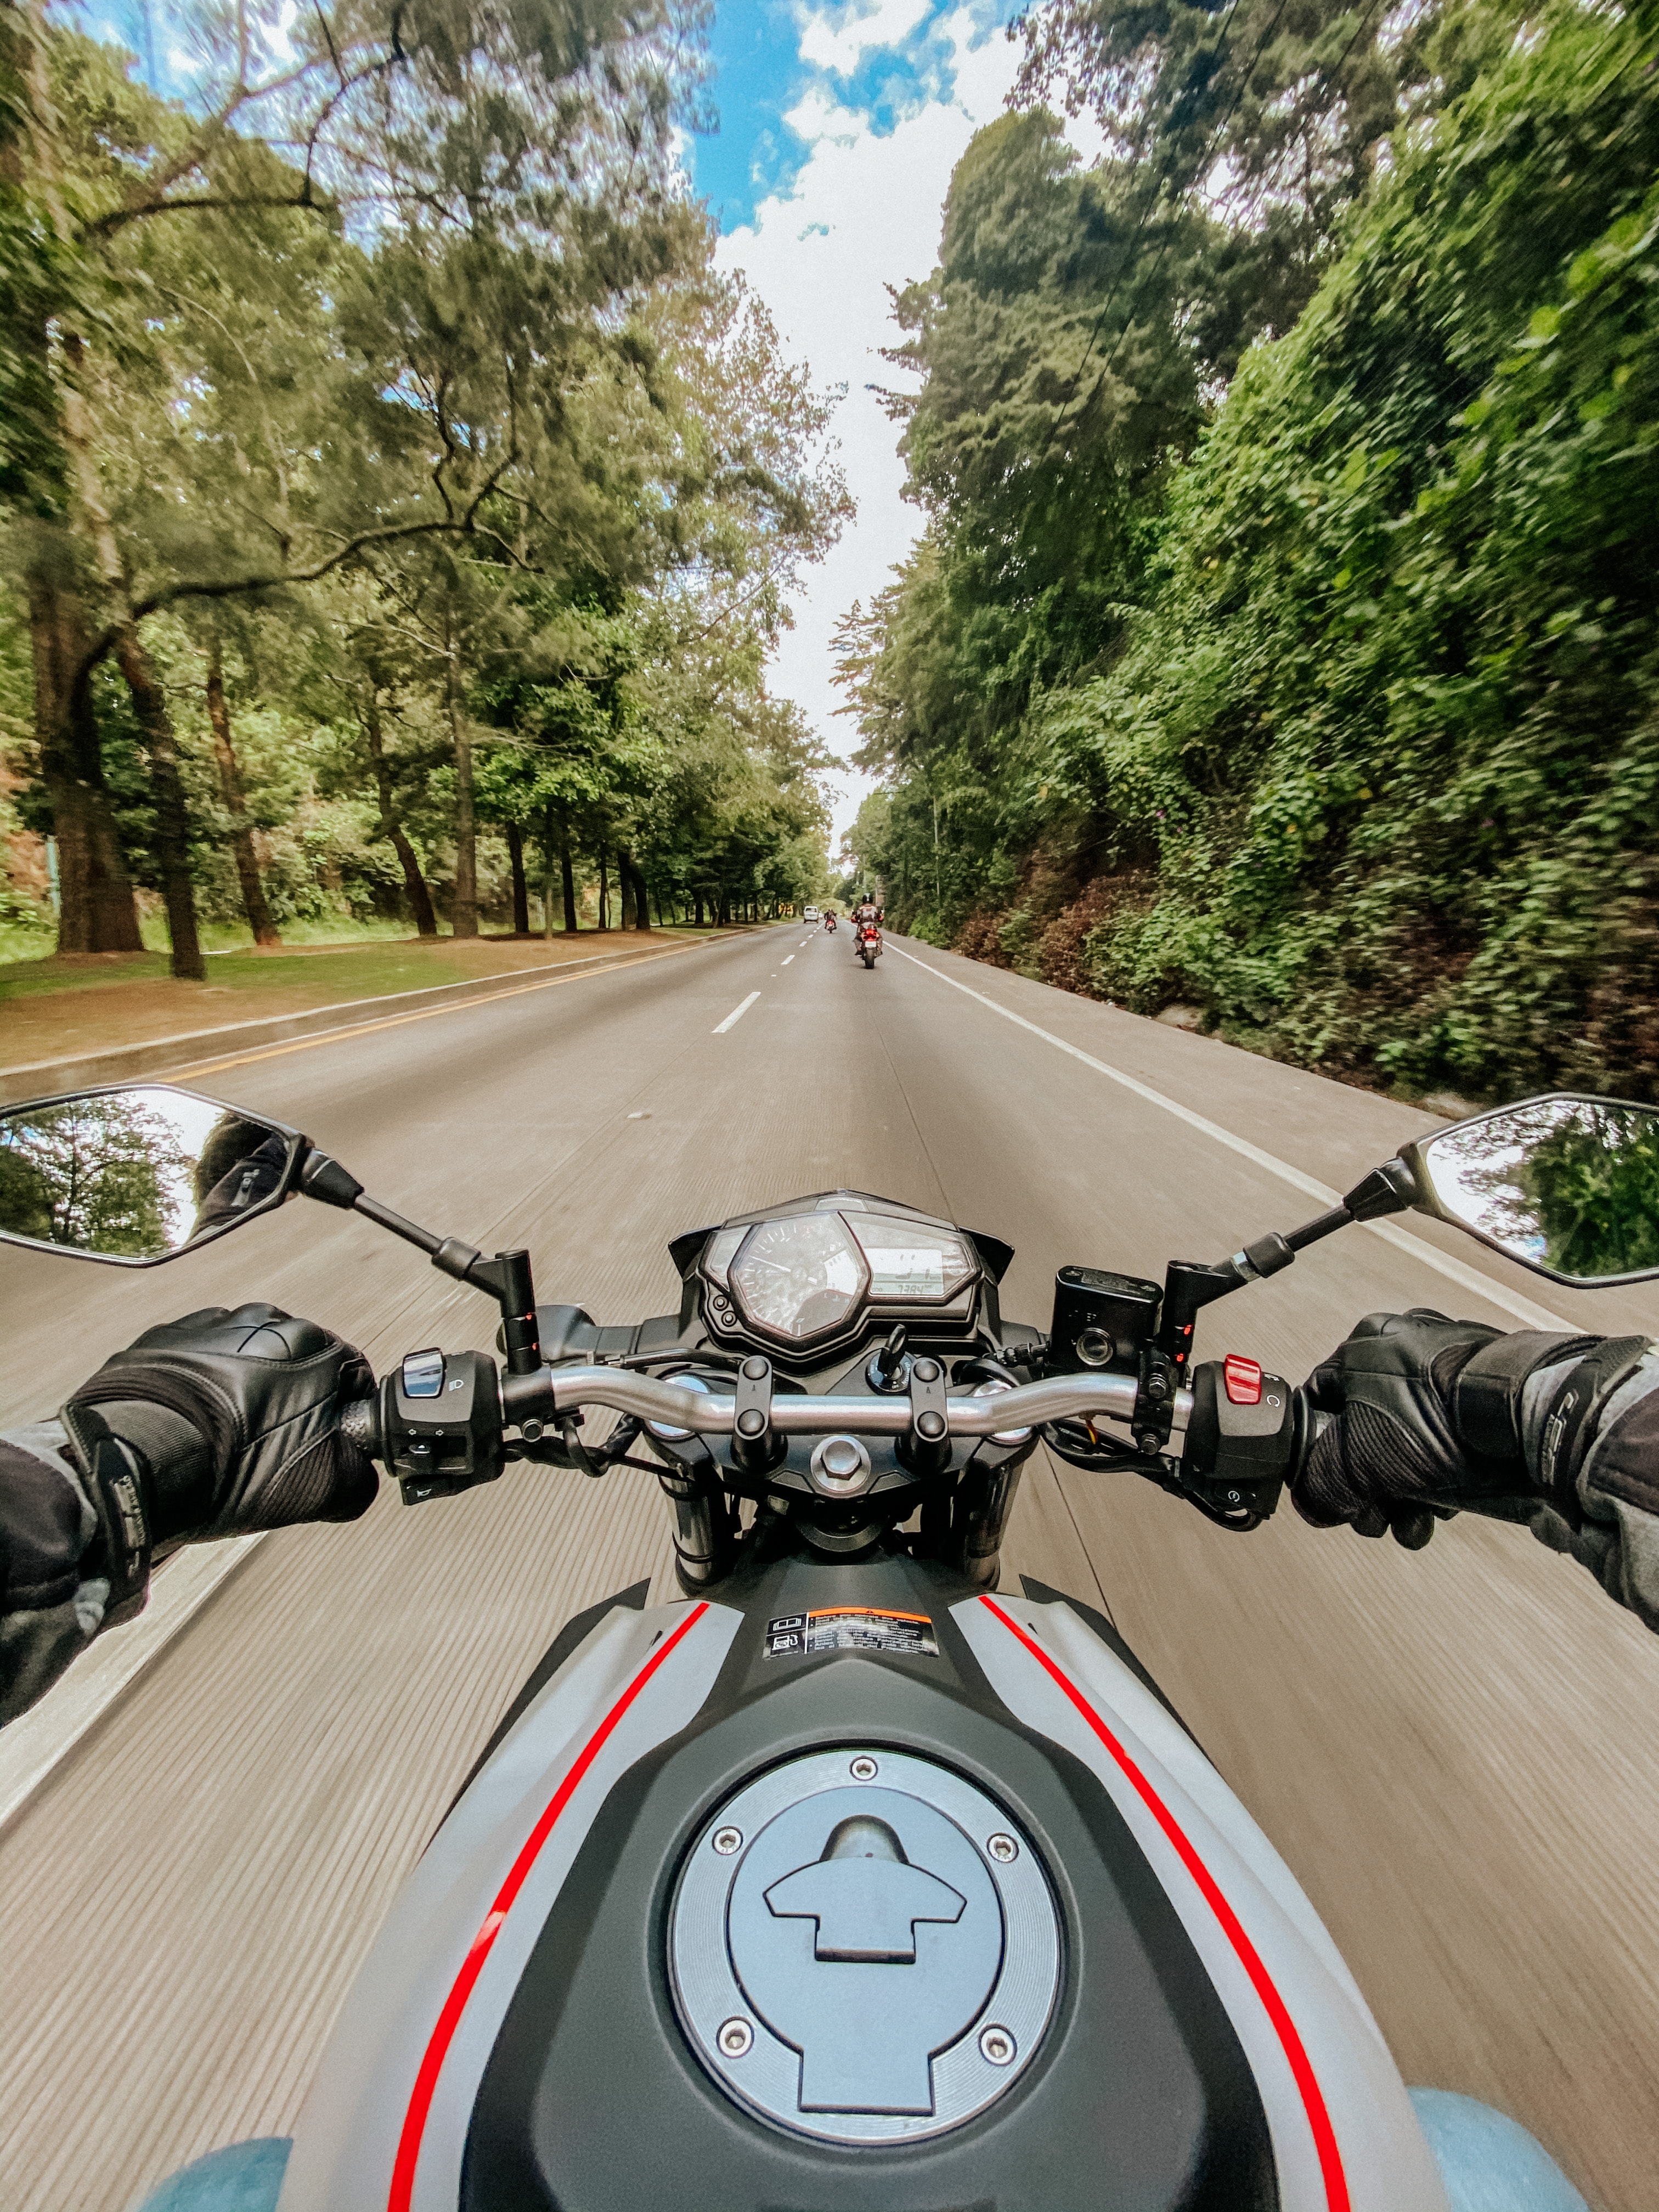 bike, motorcycle, motorcycles, speed, road cellphone